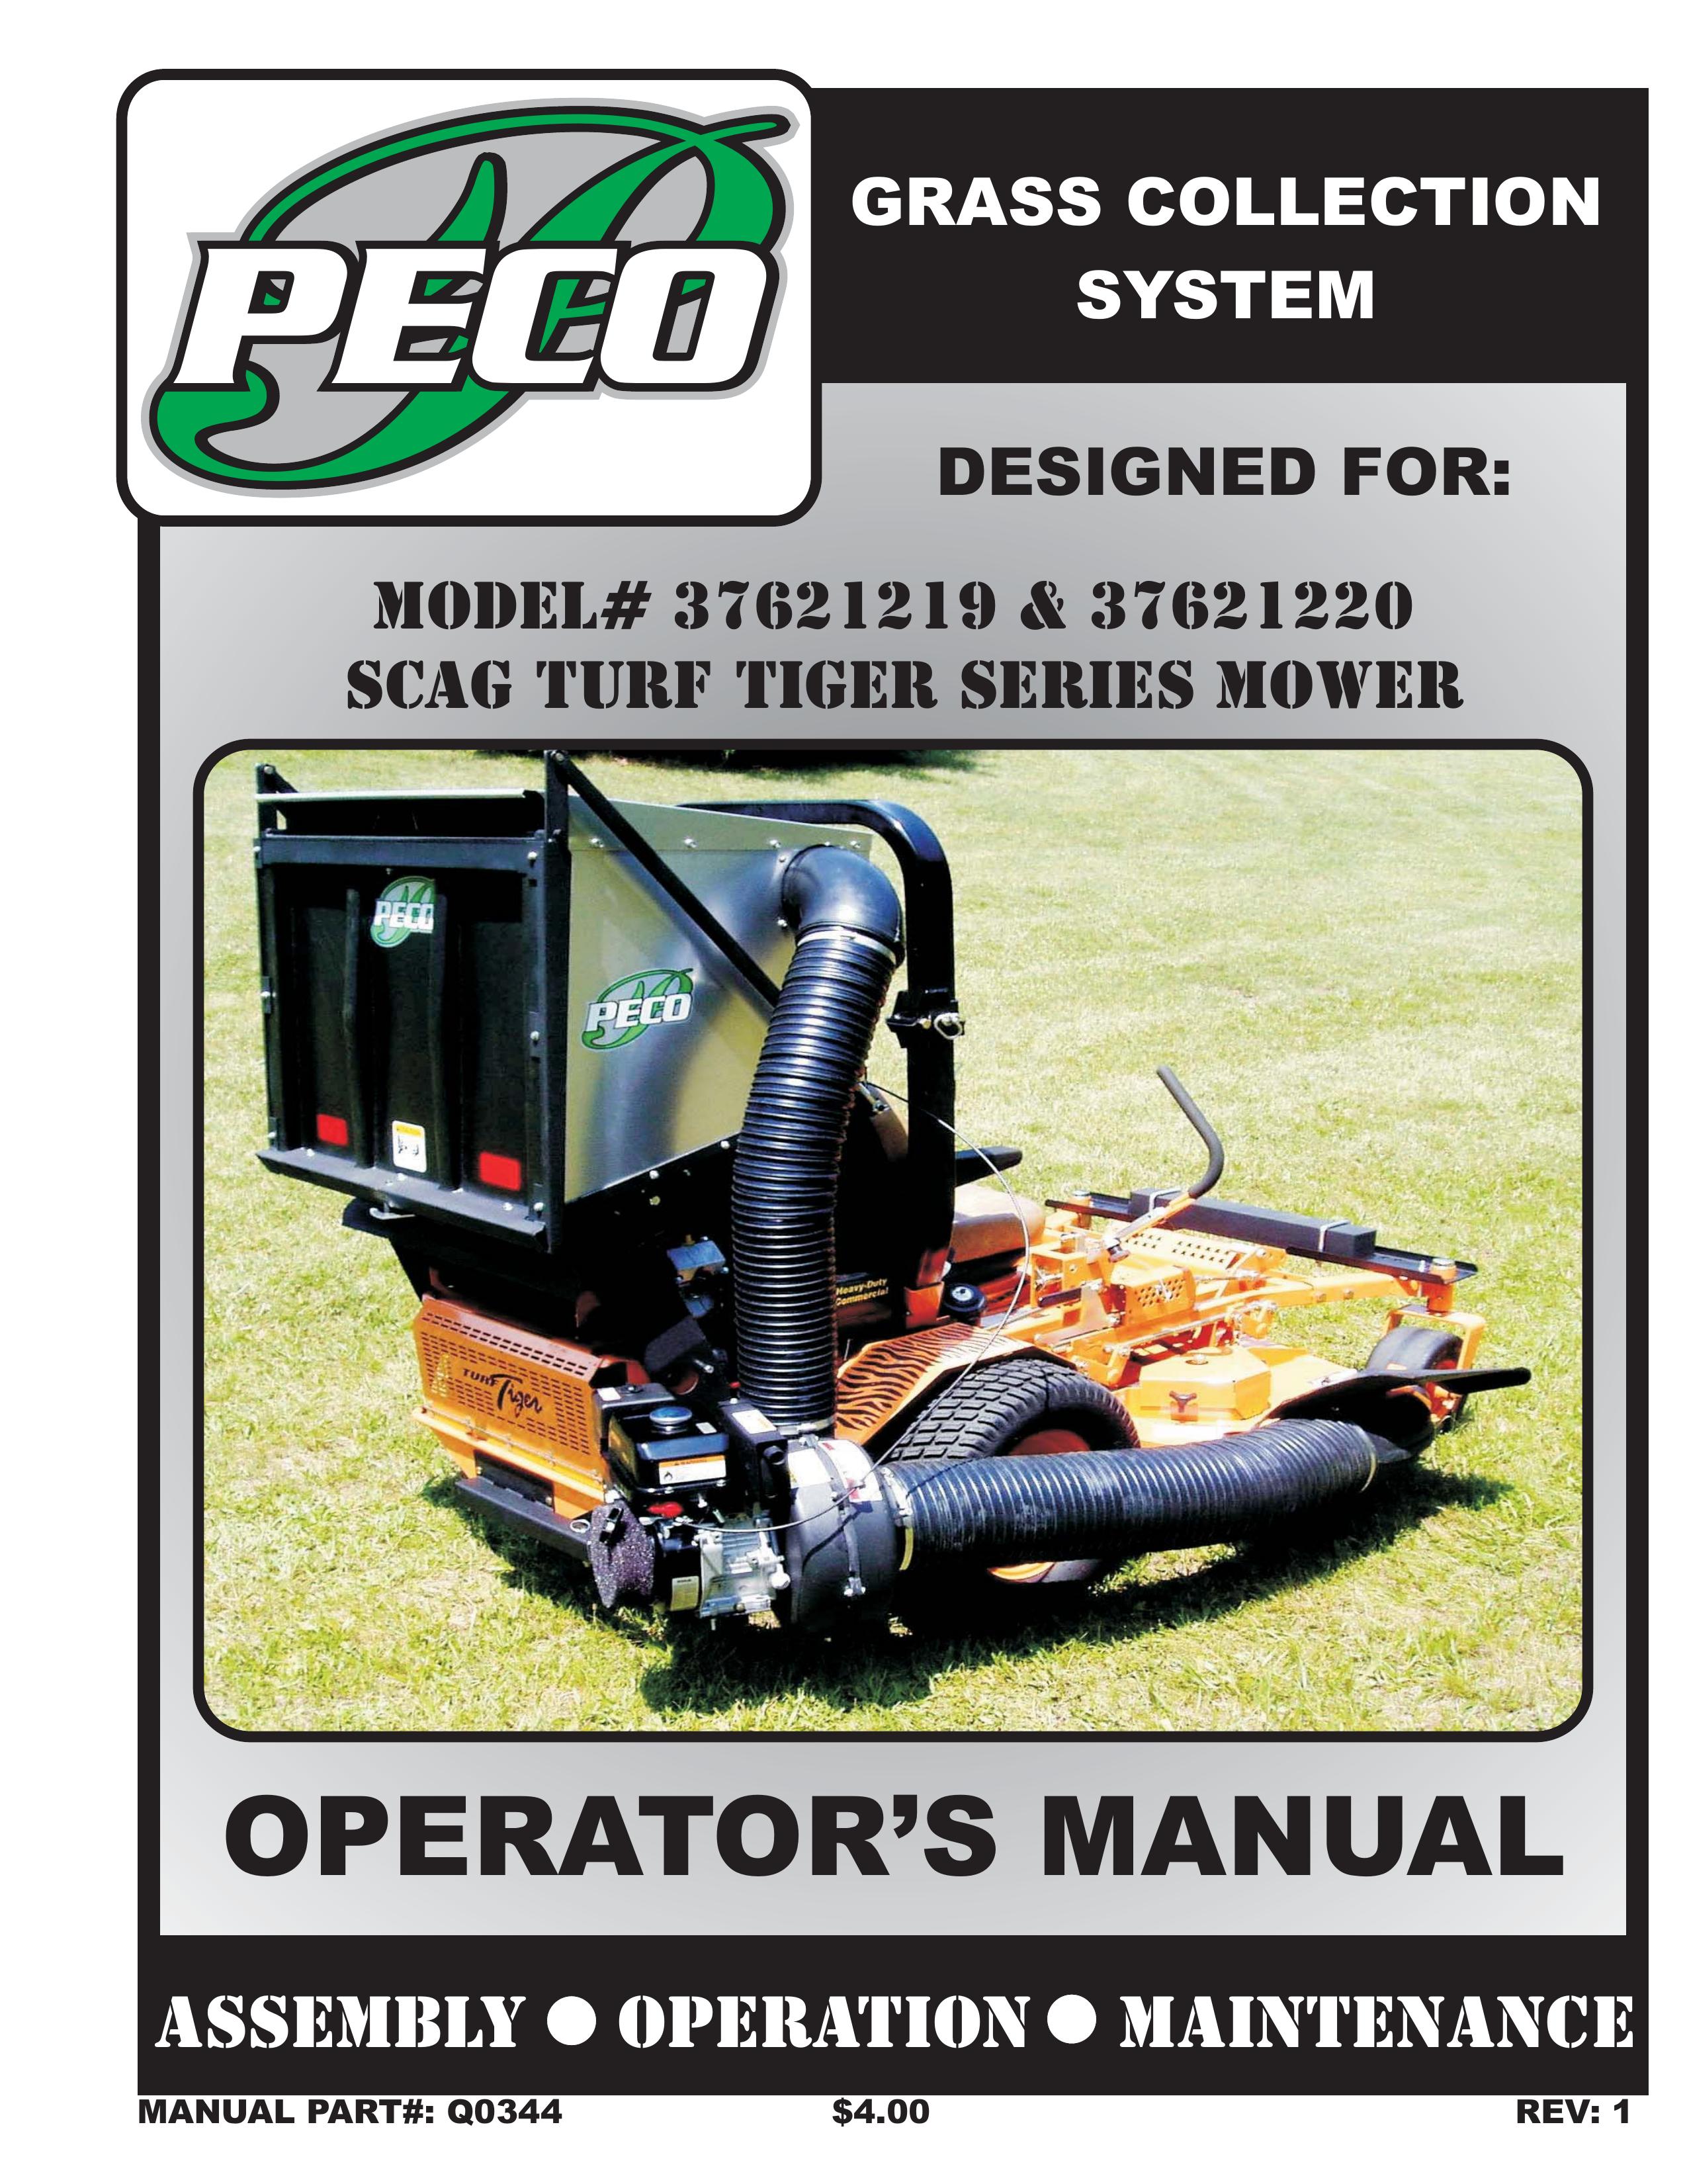 Scag Power Equipment 37621219, 37621220 Lawn Mower User Manual